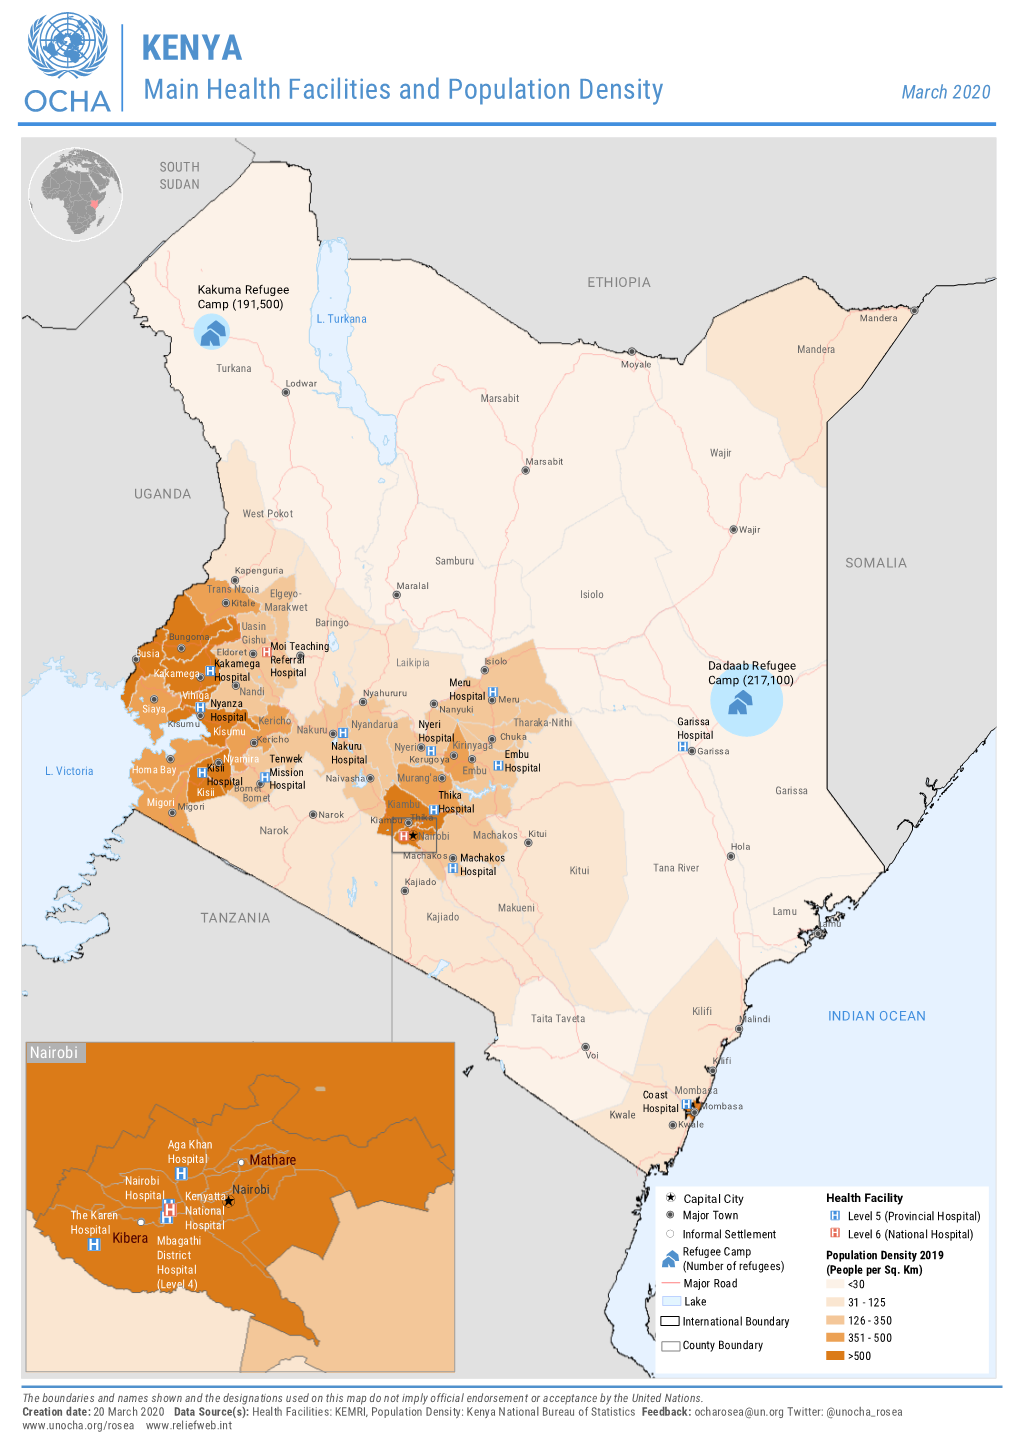 KENYA Main Health Facilities and Population Density March 2020